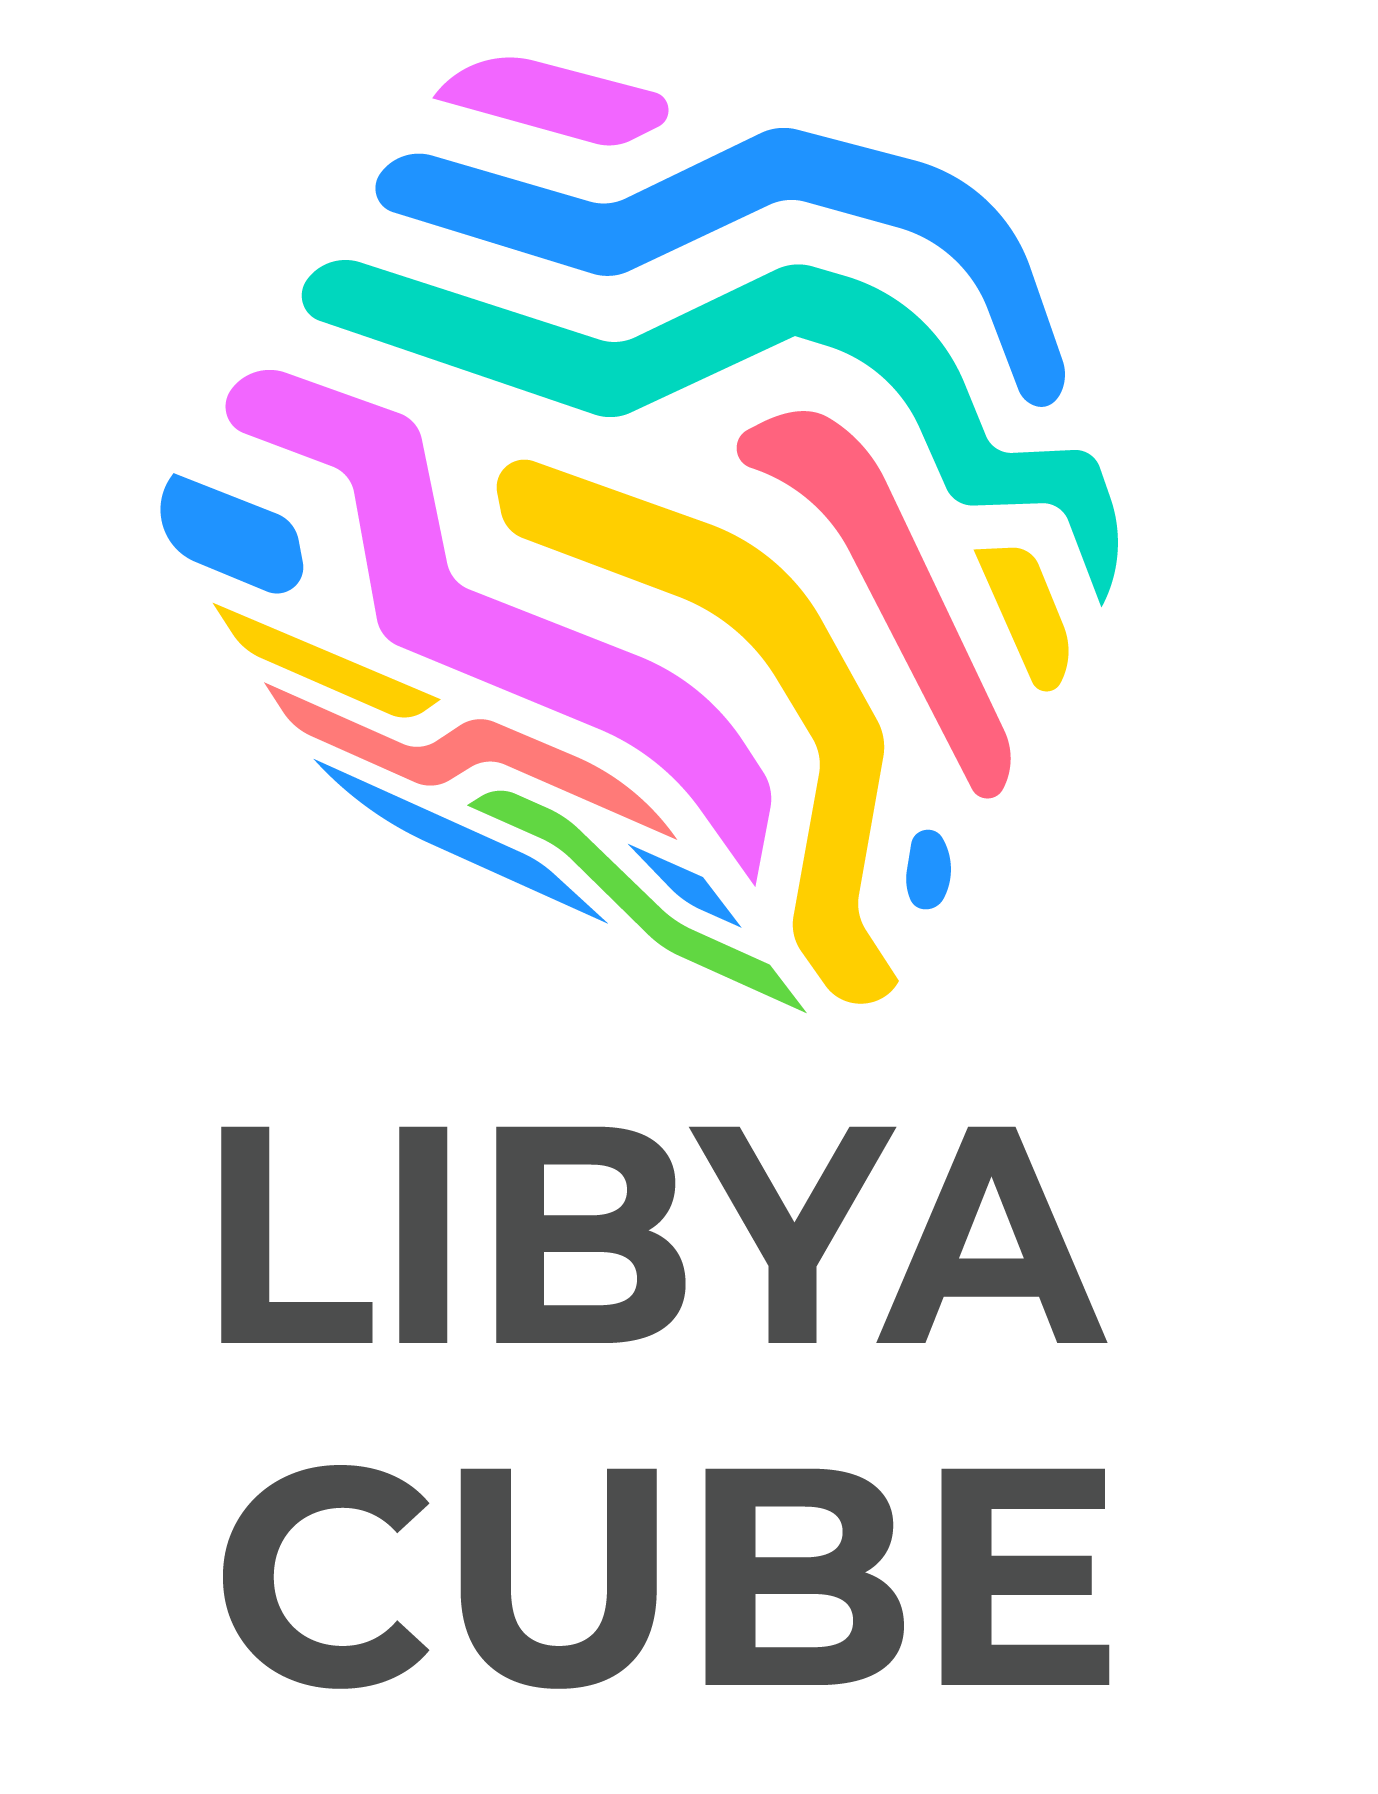 Libya Cube